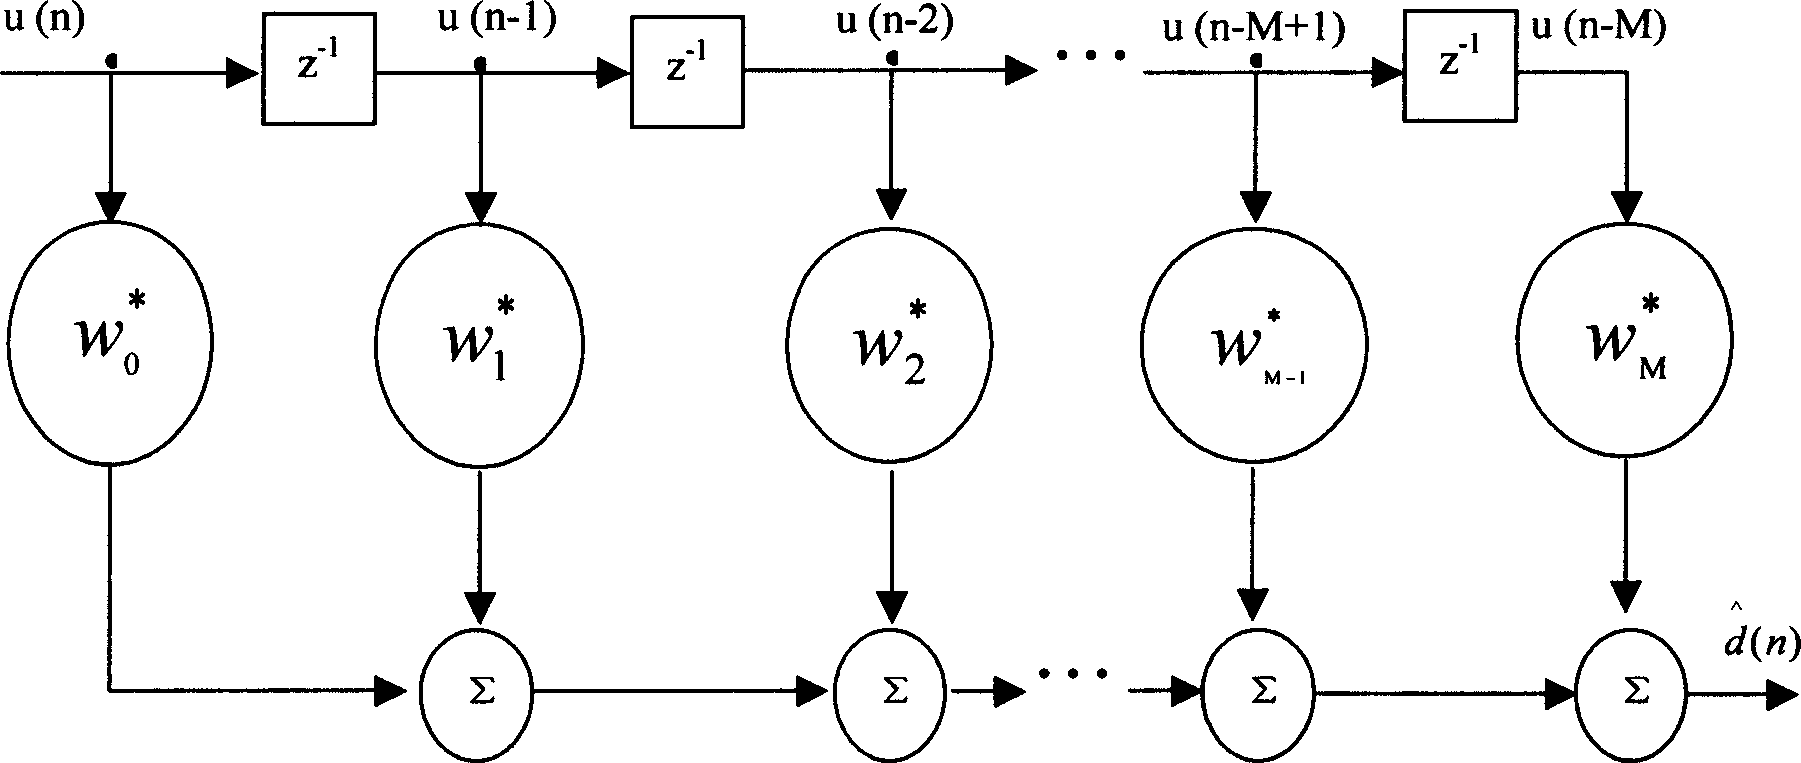 Non-refrigeration infrared focus plane non-uniform correcting algorithm basedon Wiener filter theory